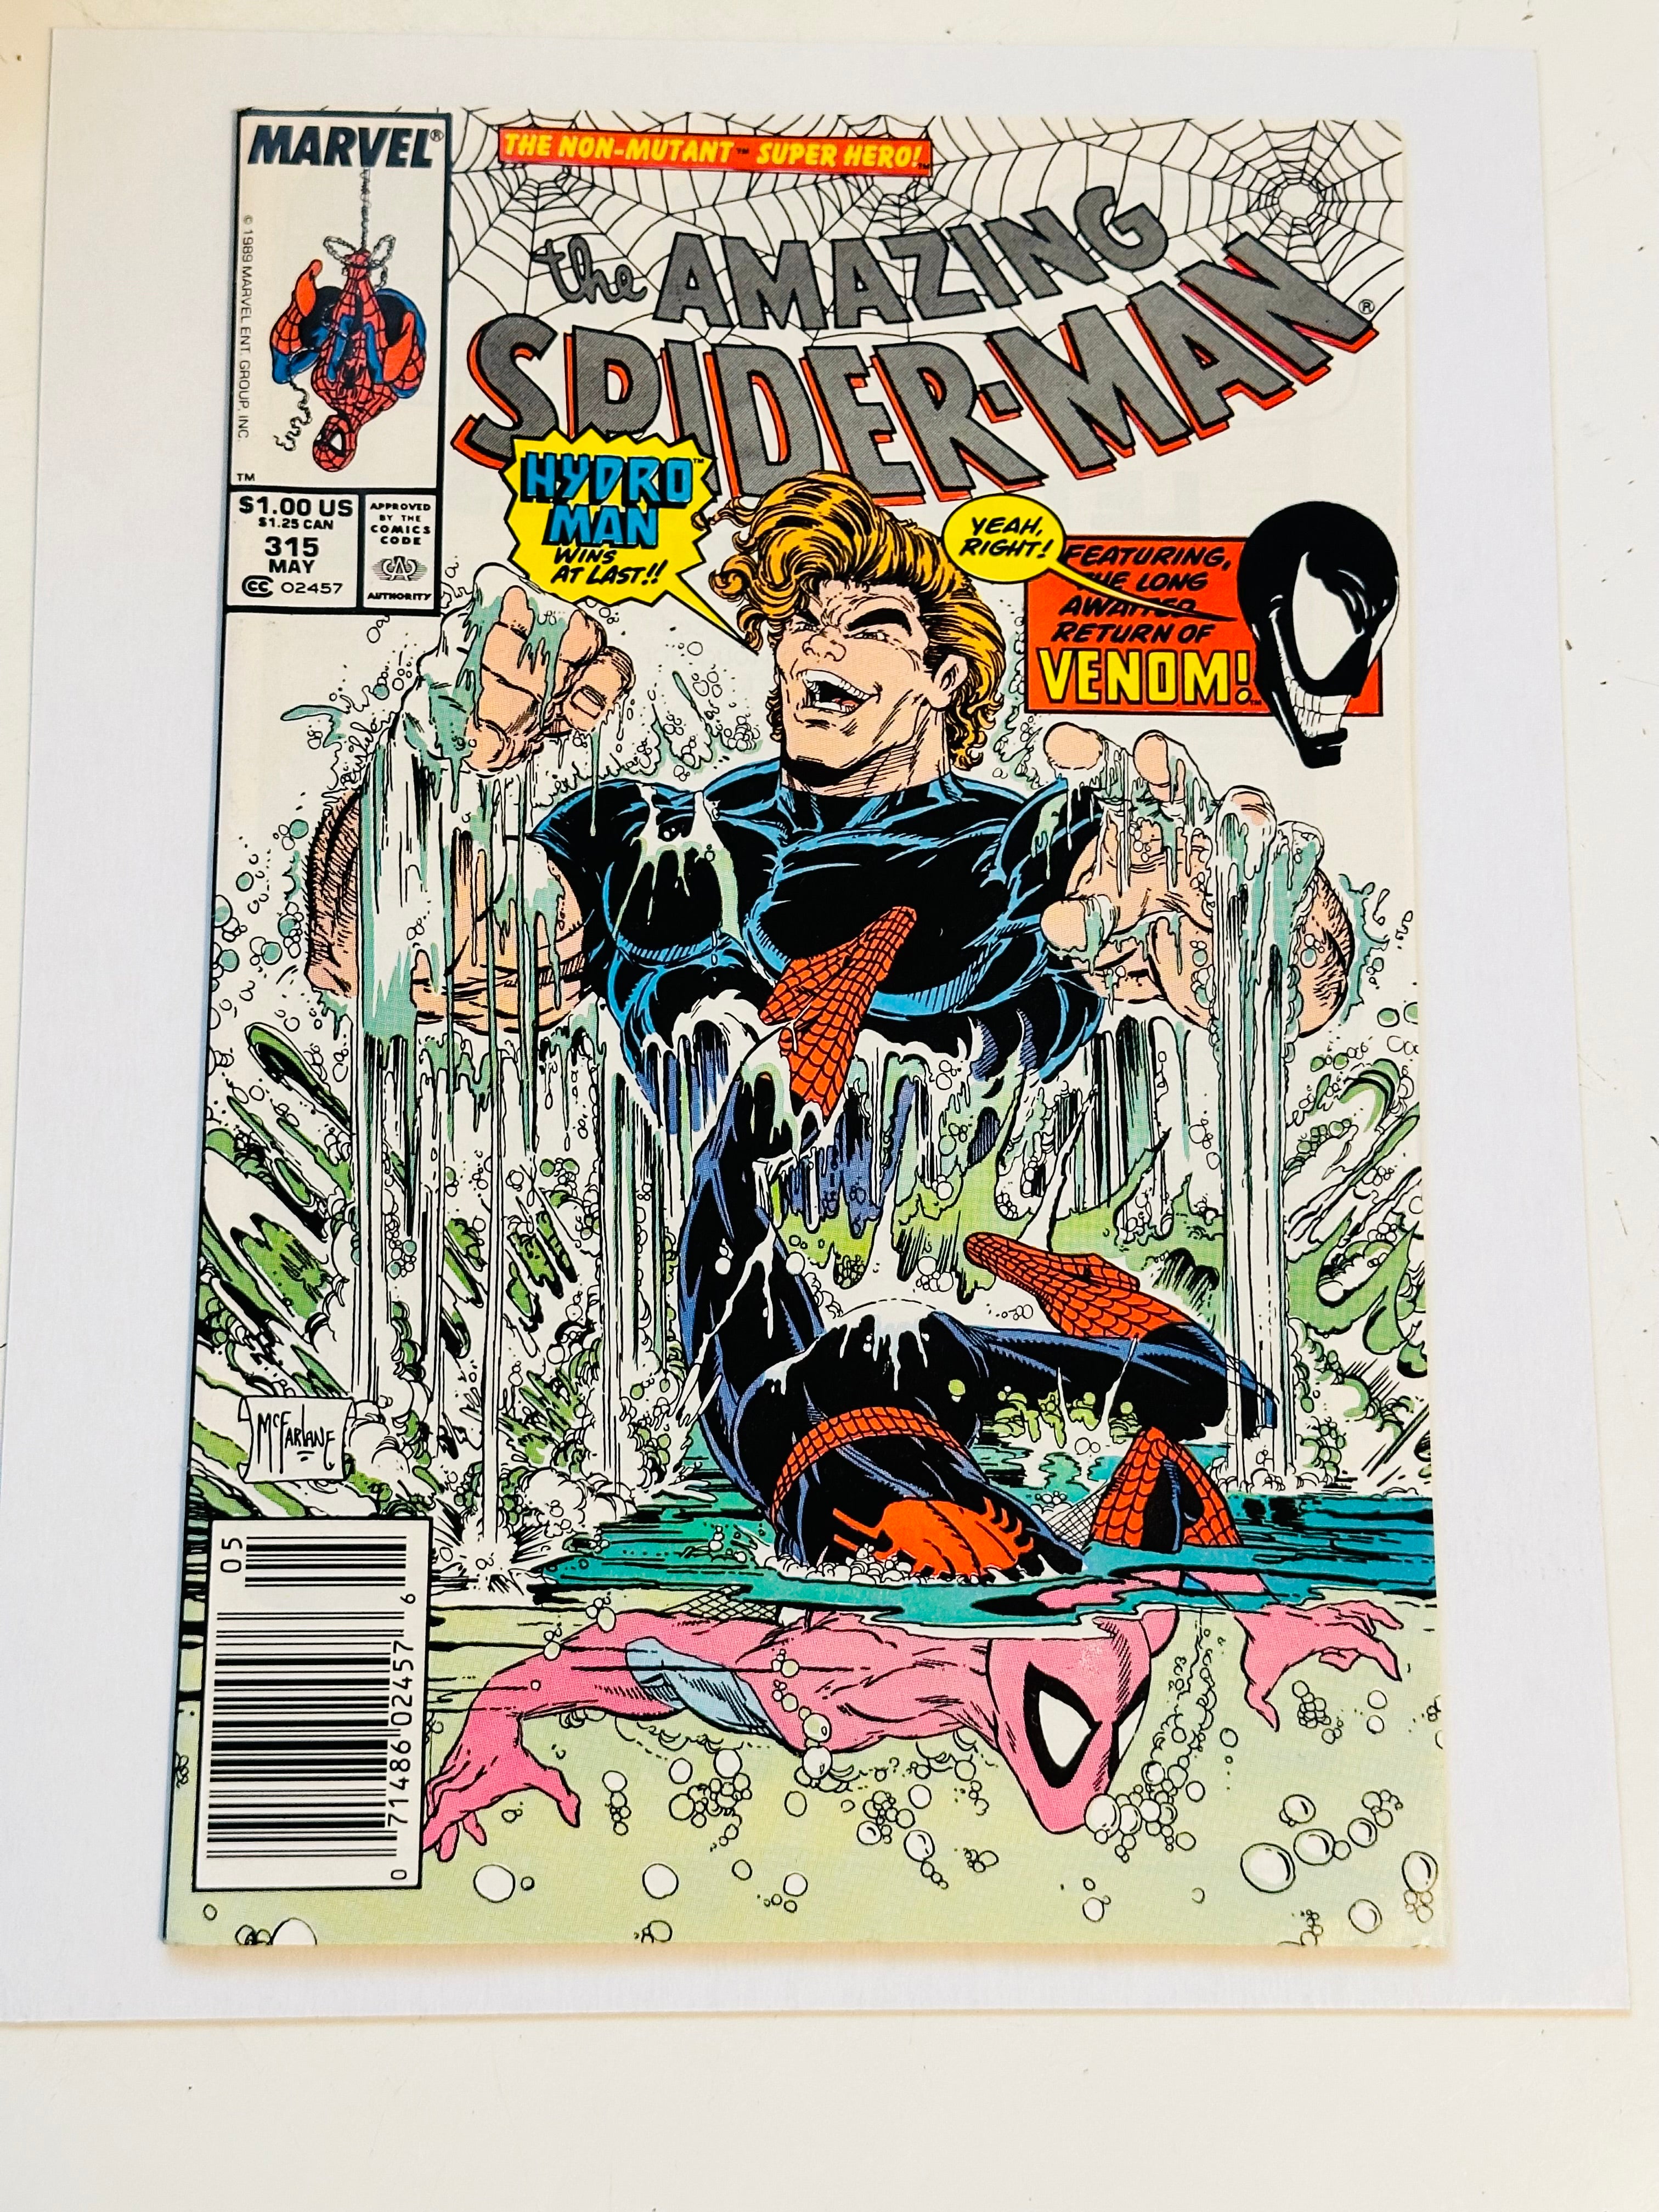 Amazing Spider-man #315 comic book